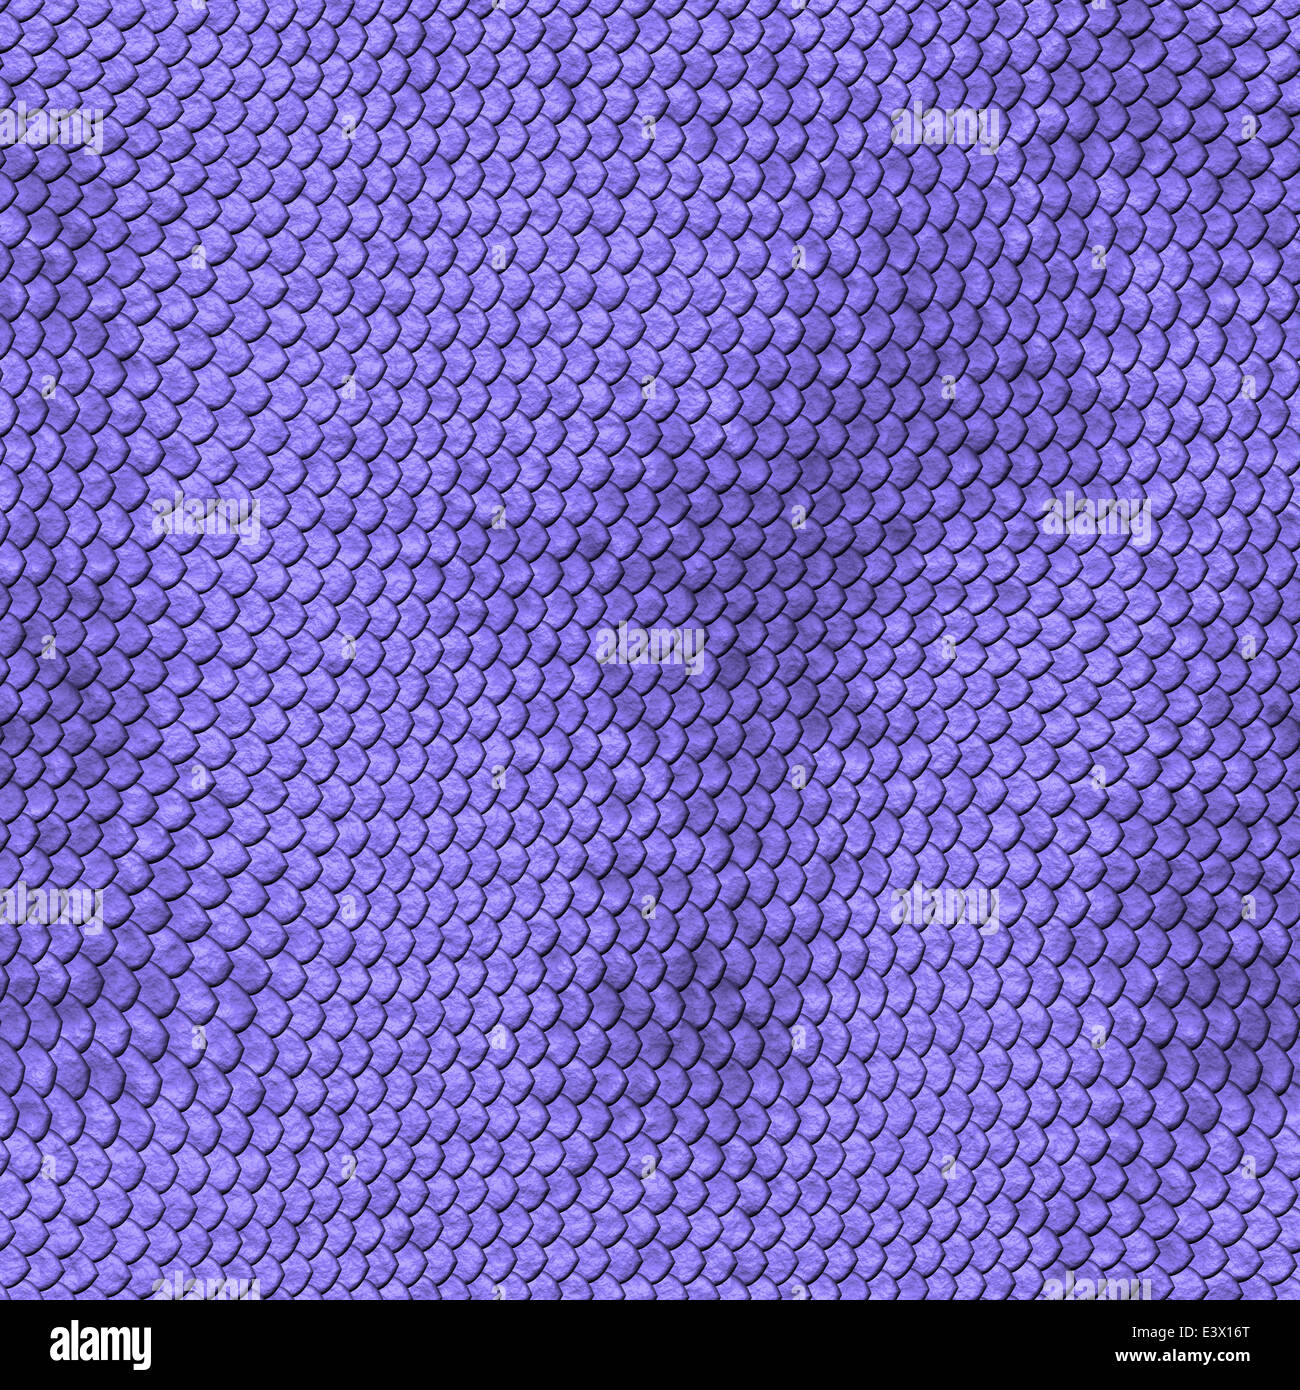 Snakeskin leather, purple background Stock Photo